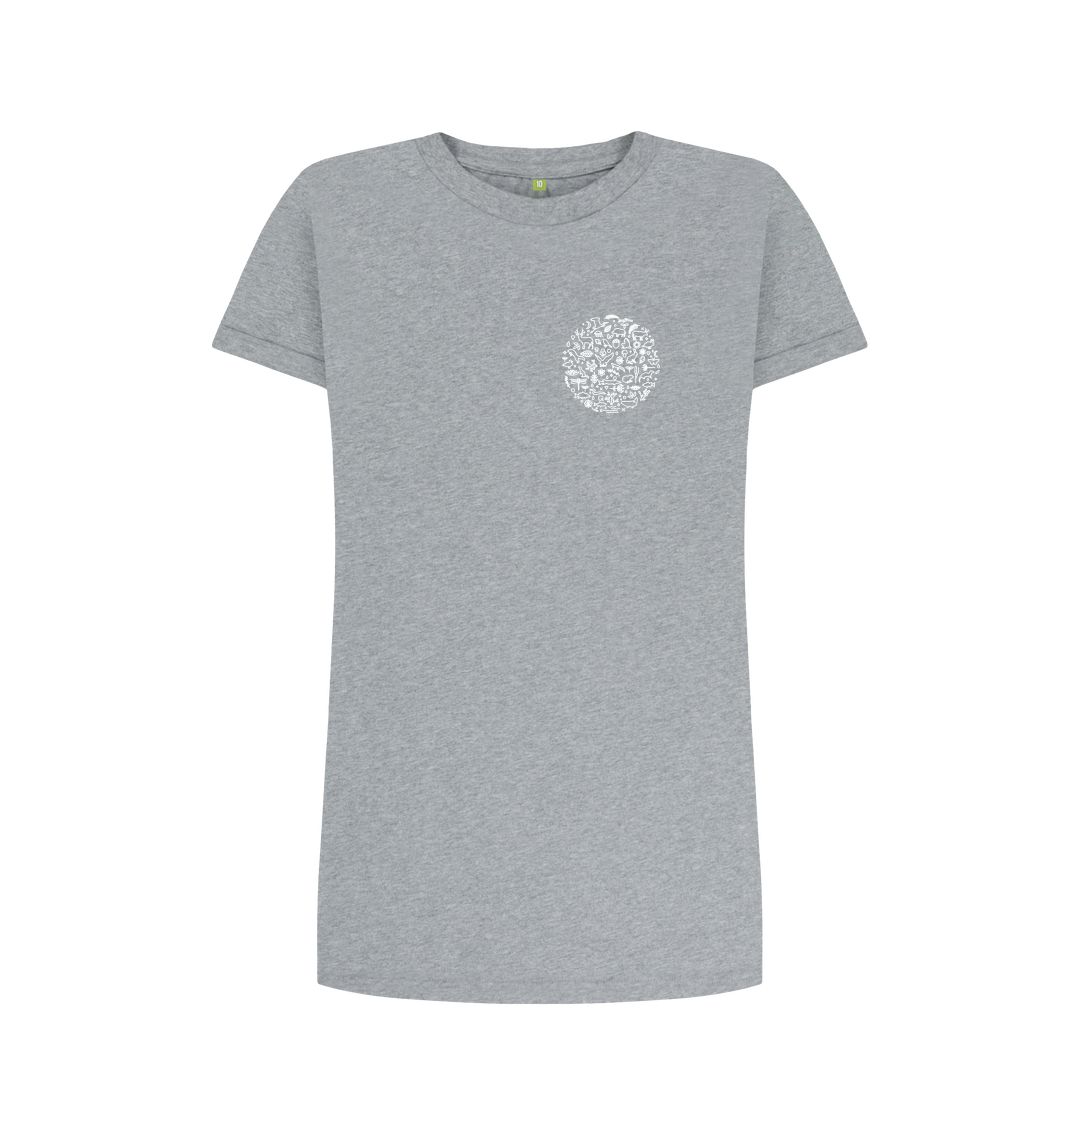 Athletic Grey Women's T-shirt Dress Fritton Lake (White chest logo)